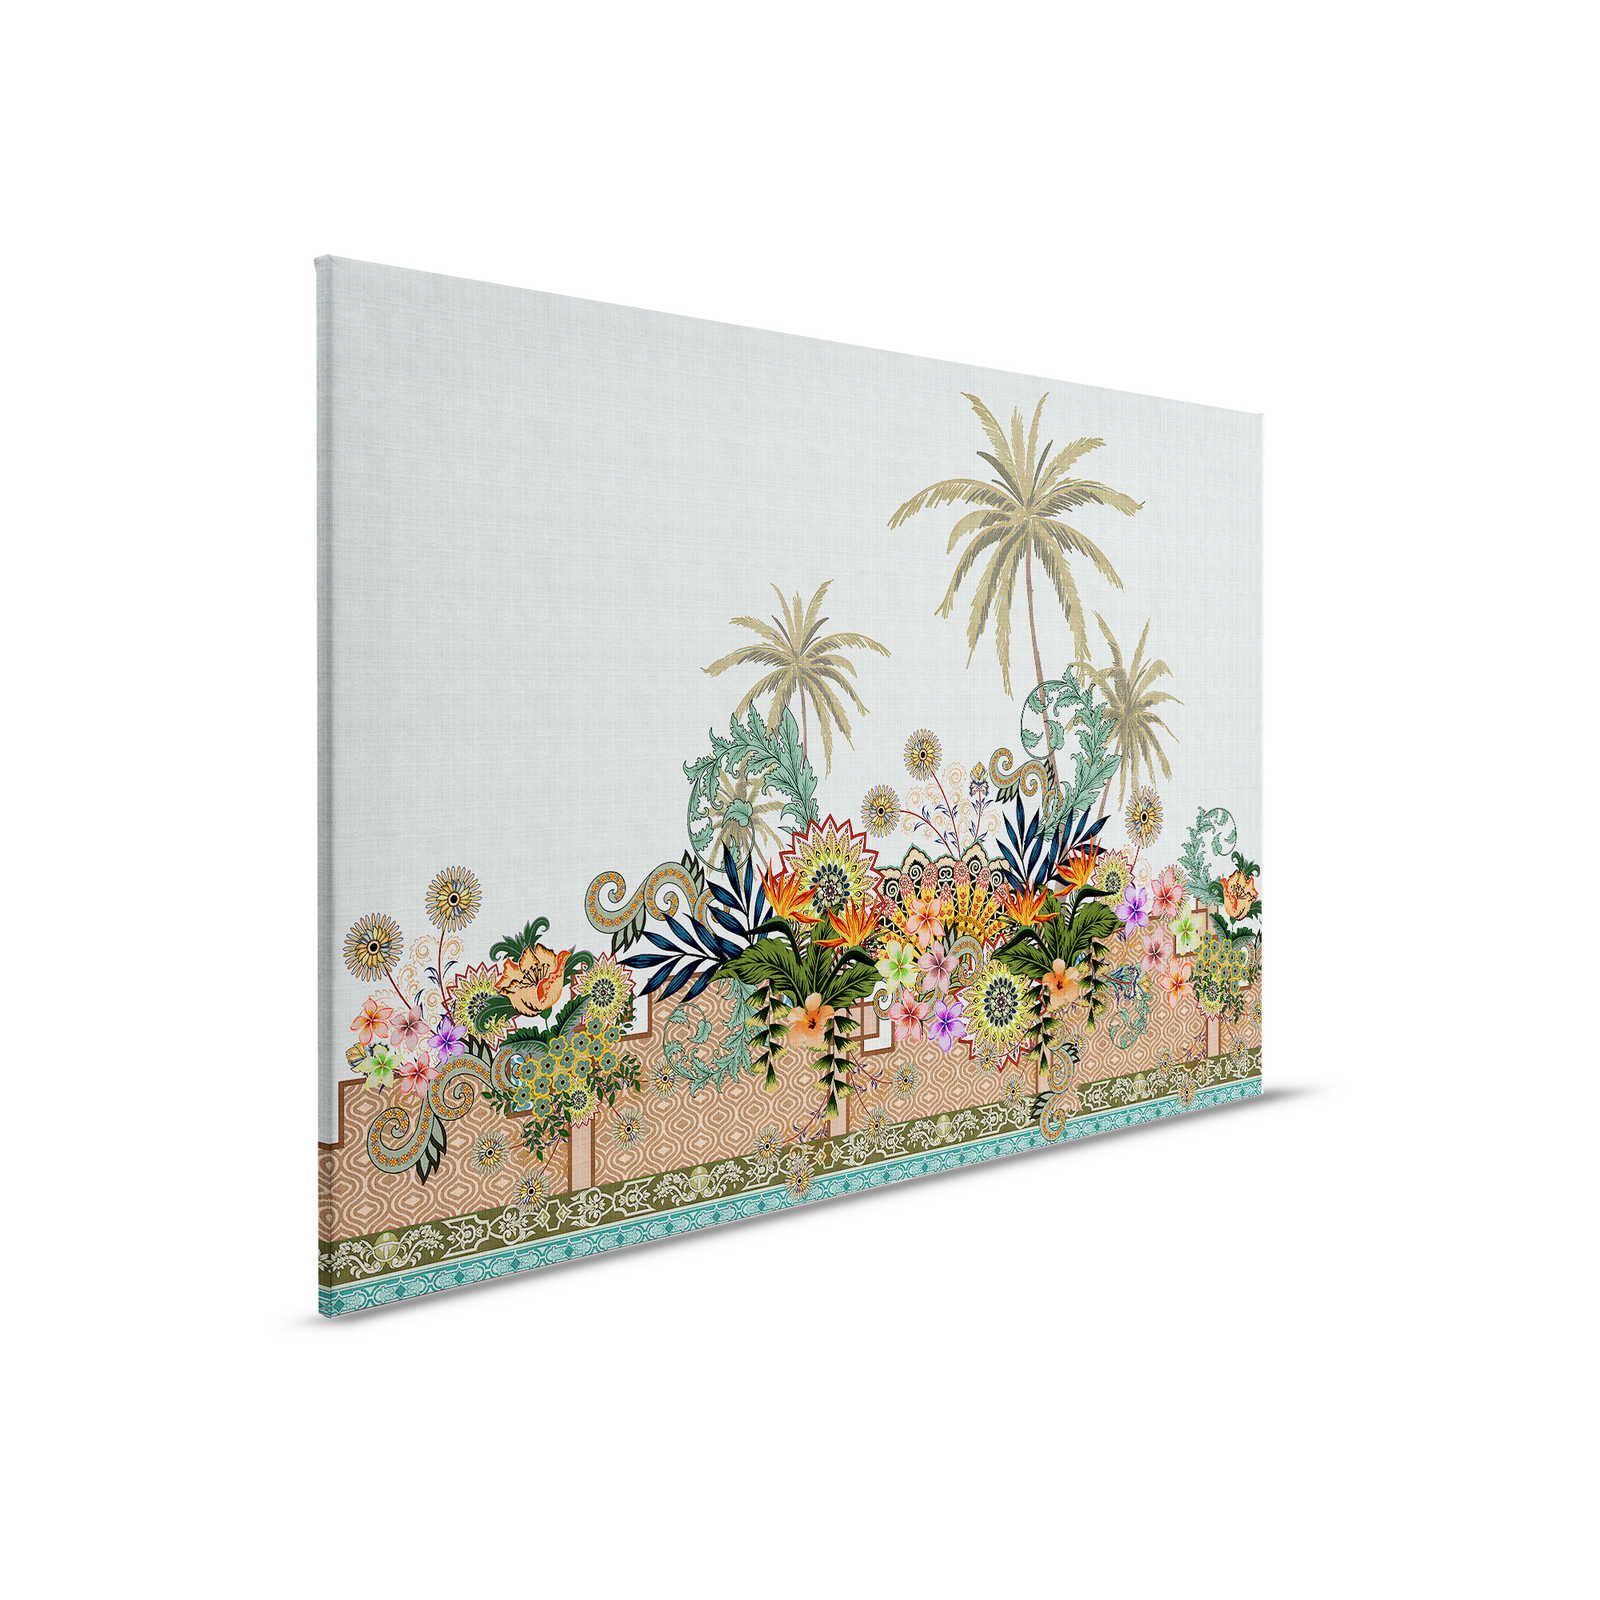 Giardino orientale 3 - Quadro su tela Fiori giardino stile India - 0,90 m x 0,60 m
